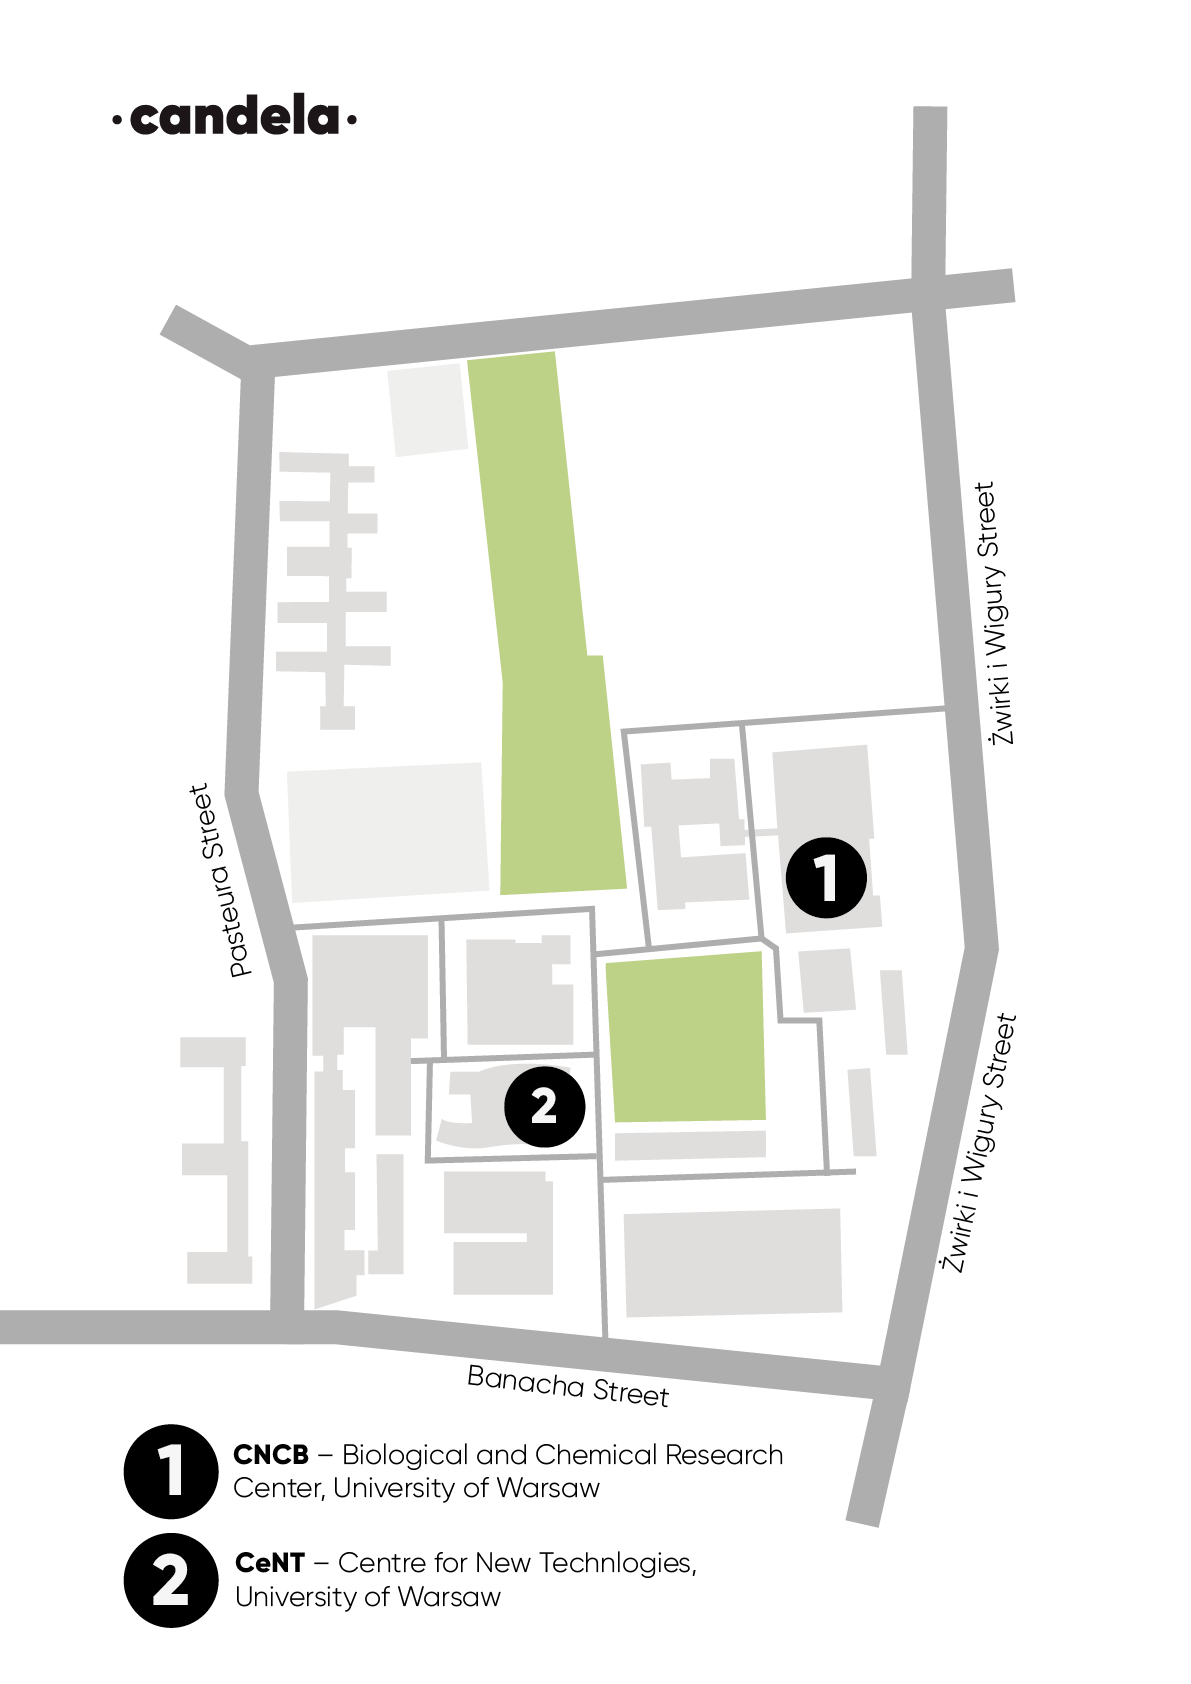 Map of the ochota campus